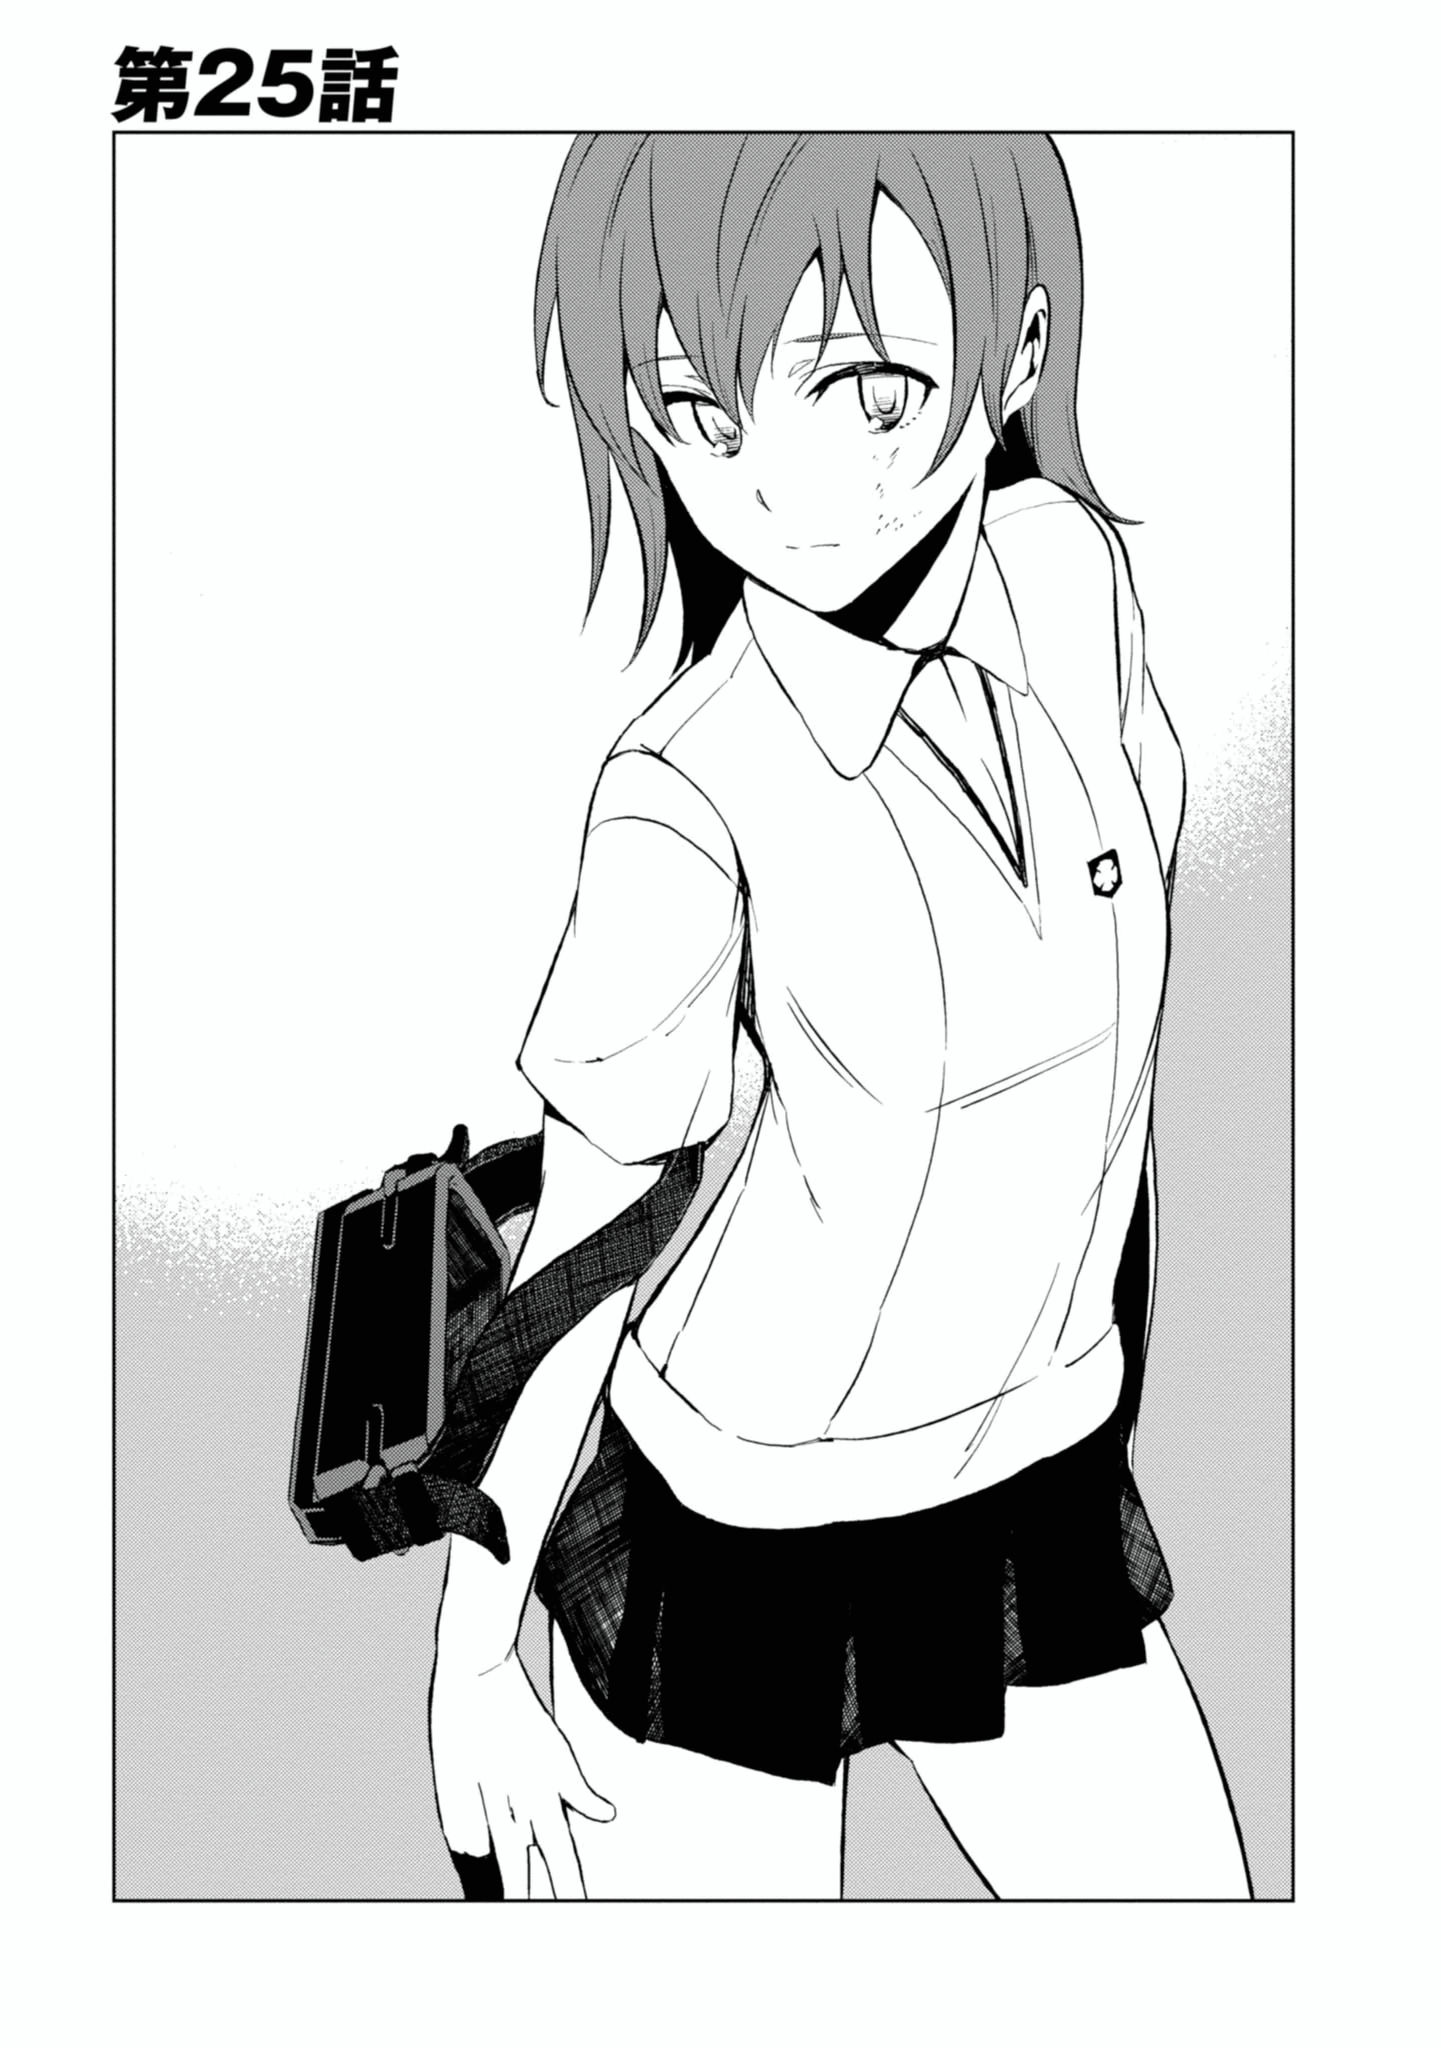 Licensed To Aru Kagaku no Accelerator - Manga Discussion [Archive] - Page 3  - AnimeSuki Forum